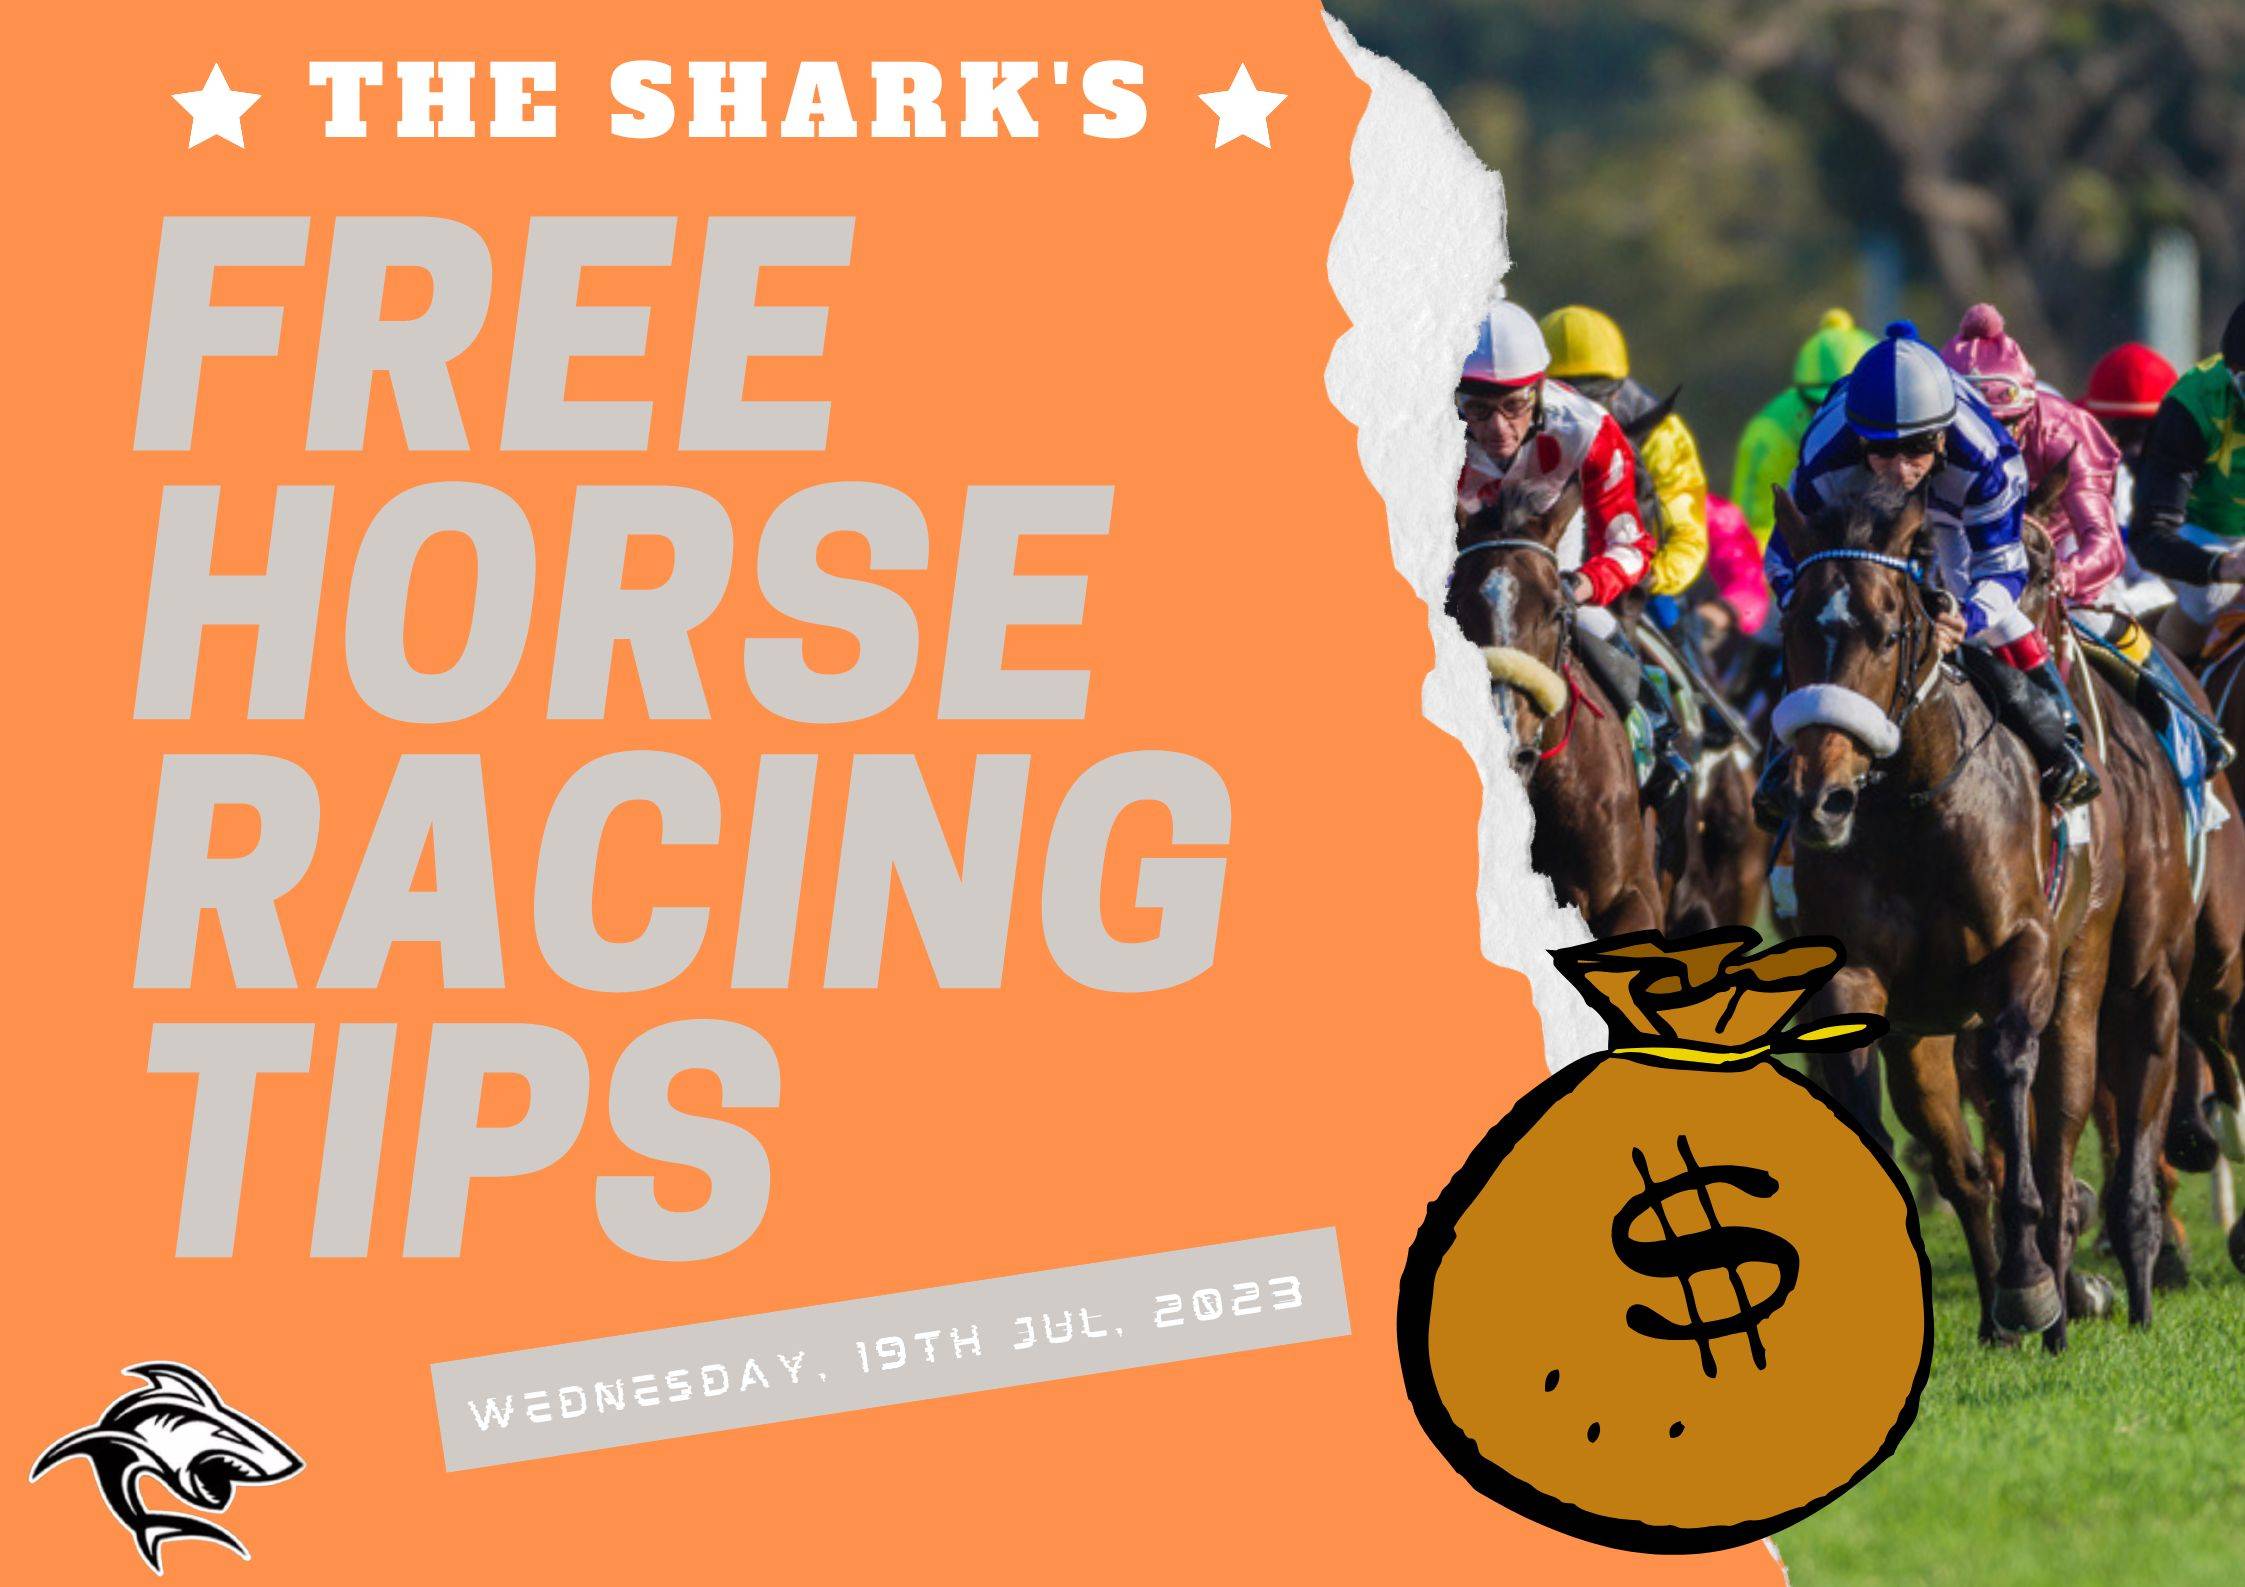 Free Horse Racing Tips - 19th Jul